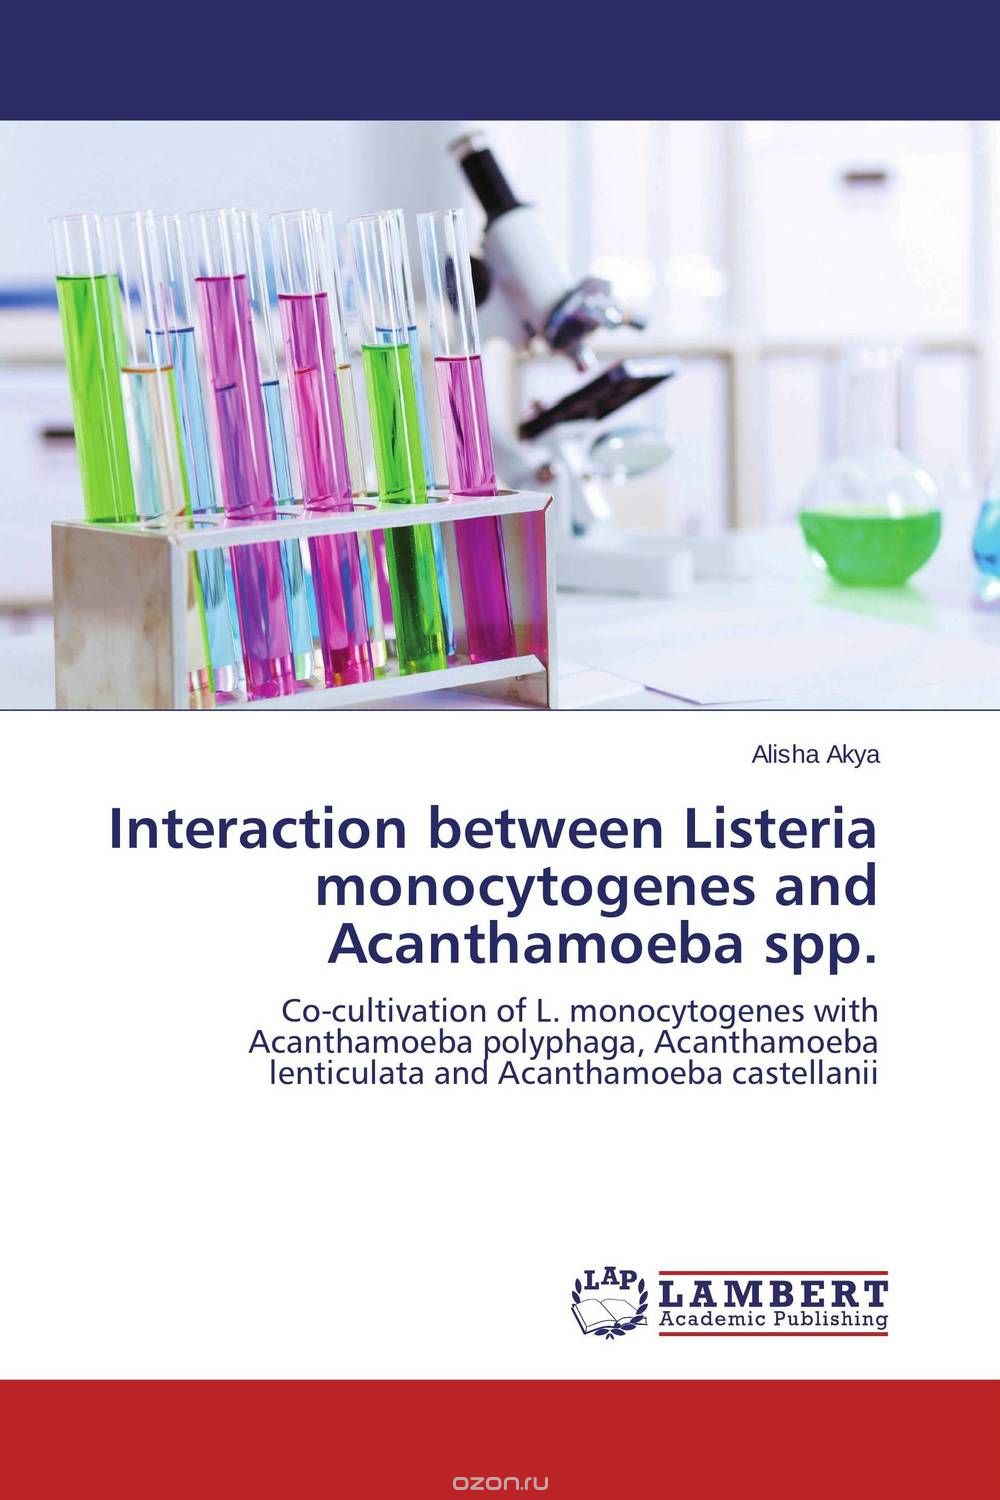 Скачать книгу "Interaction between Listeria monocytogenes and Acanthamoeba spp."